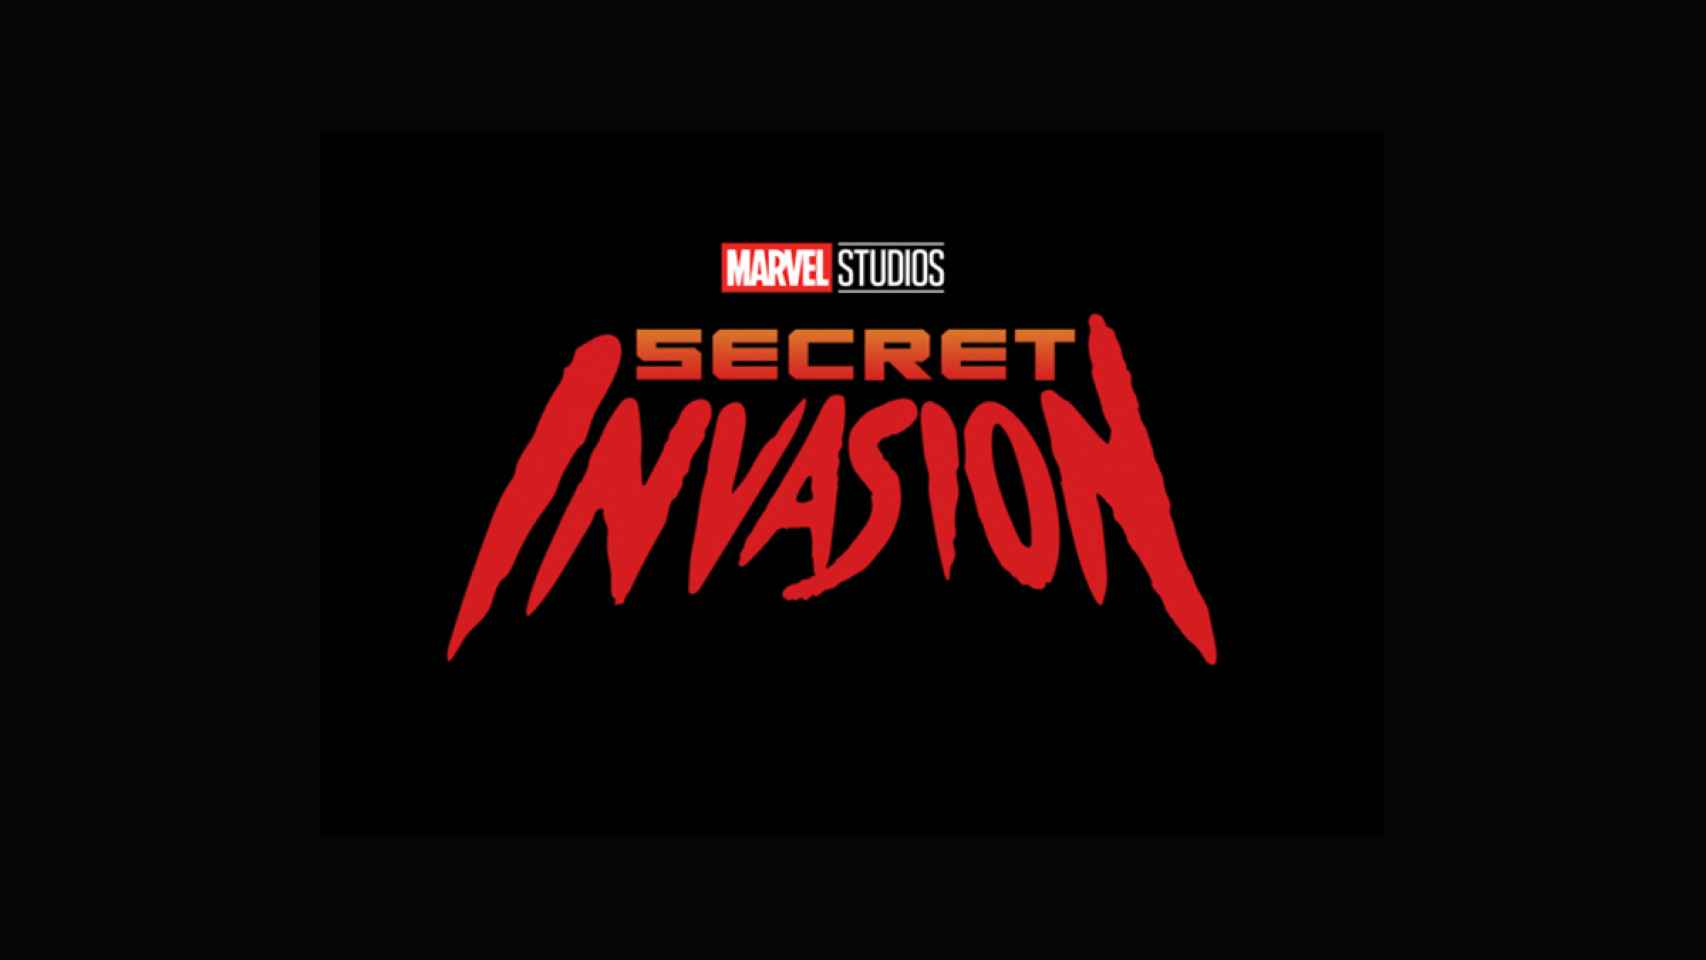 'Secret Invasion', cartel promocional.